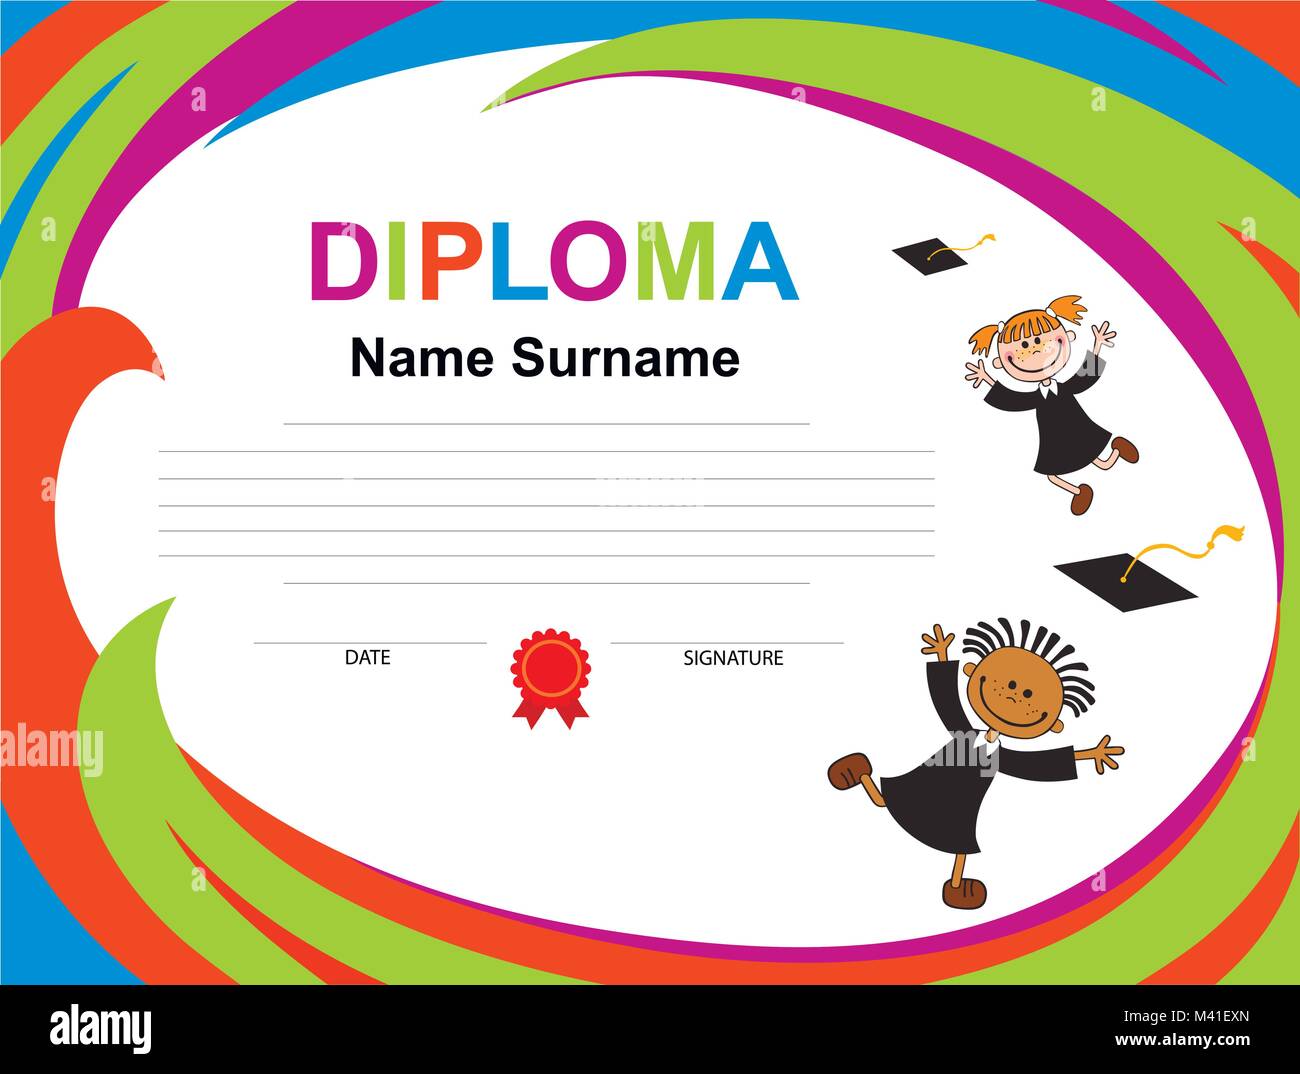 Kids Diploma certificate background design template Stock Vector